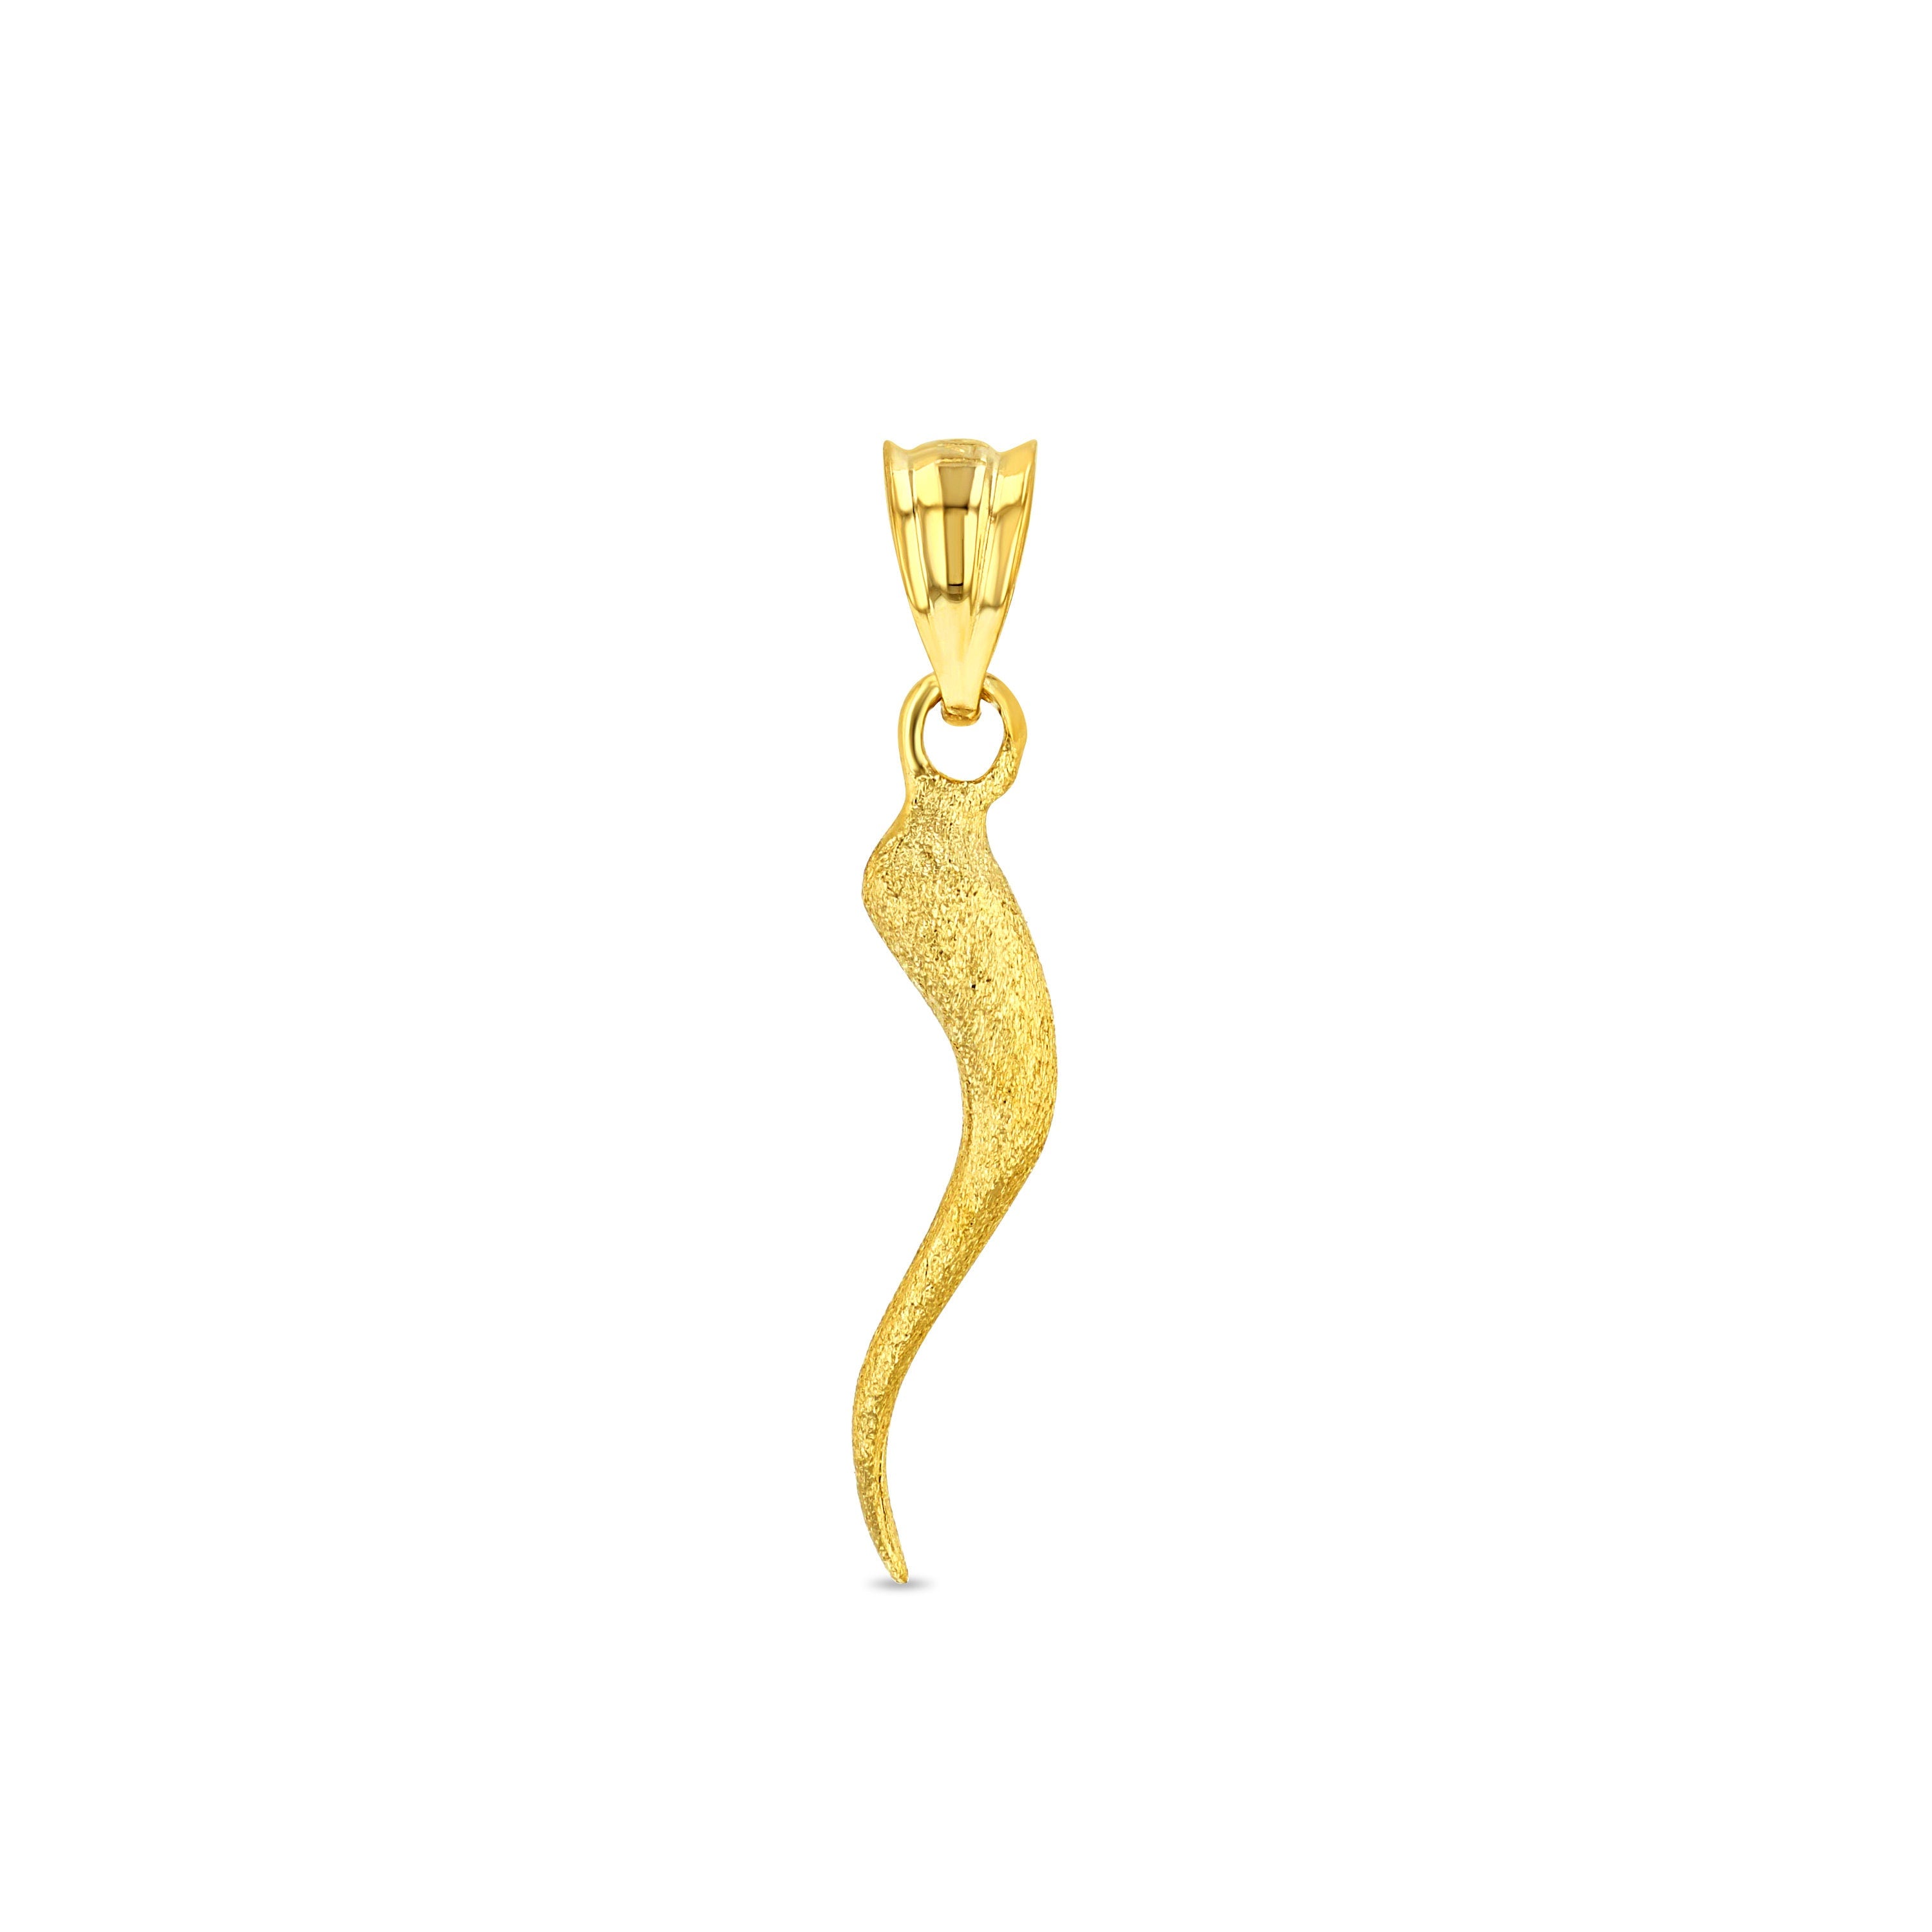 14k solid gold 3 dimensional italian horn pendant